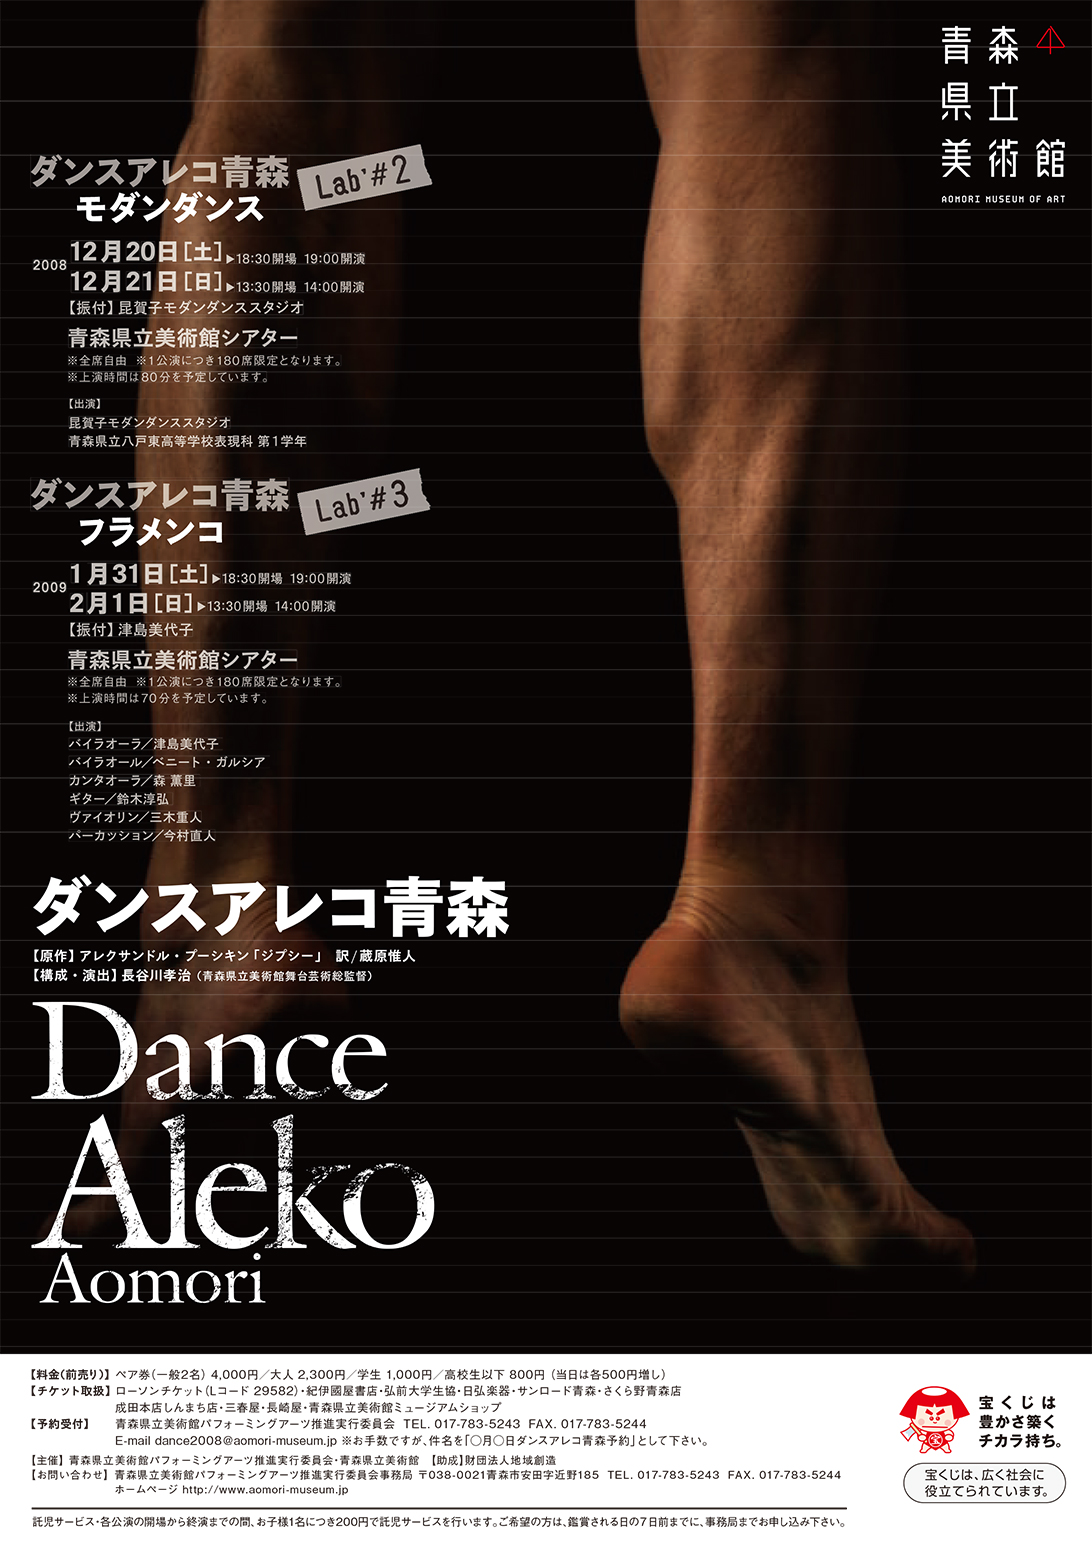 Dance Aleko Aomori Lab’#1-3